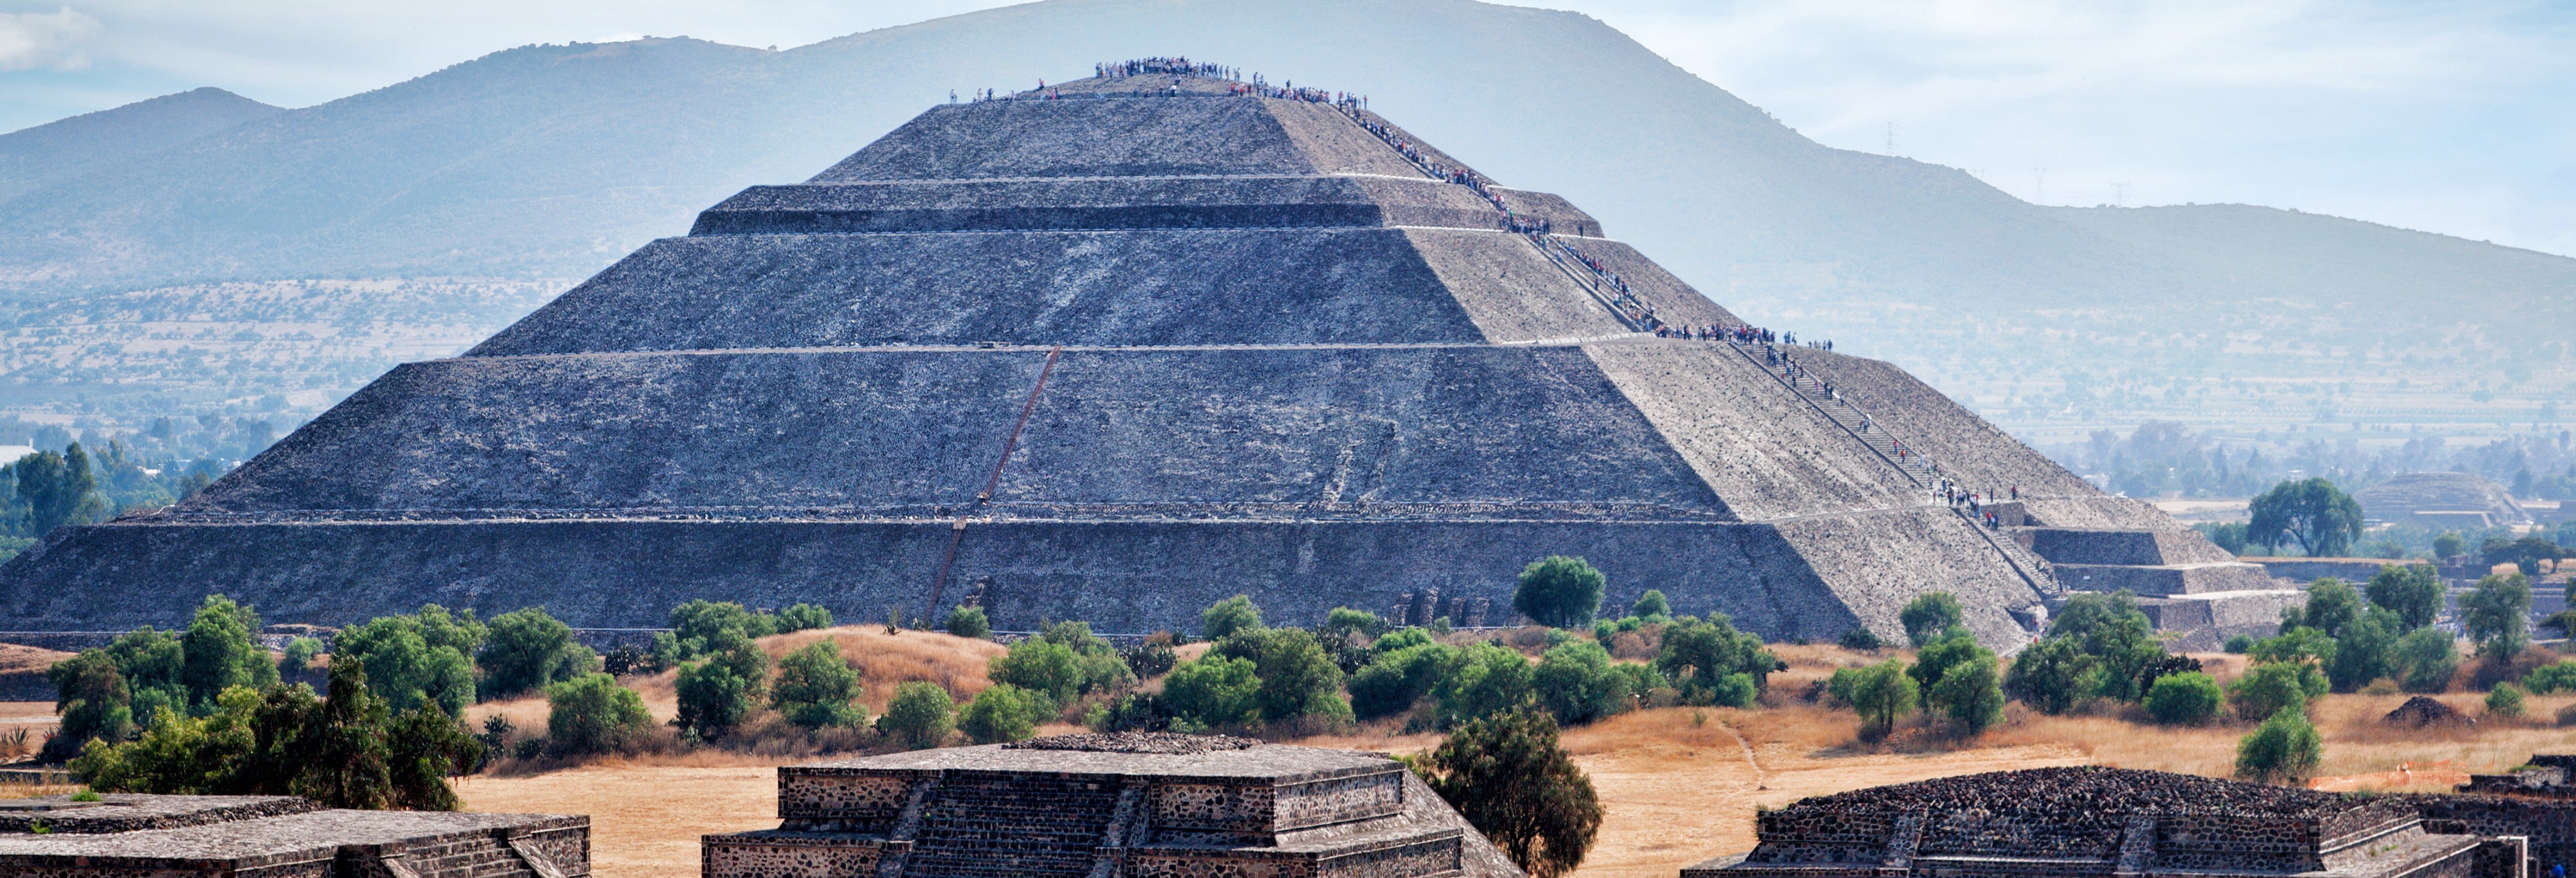 Excursão a Teotihuacán